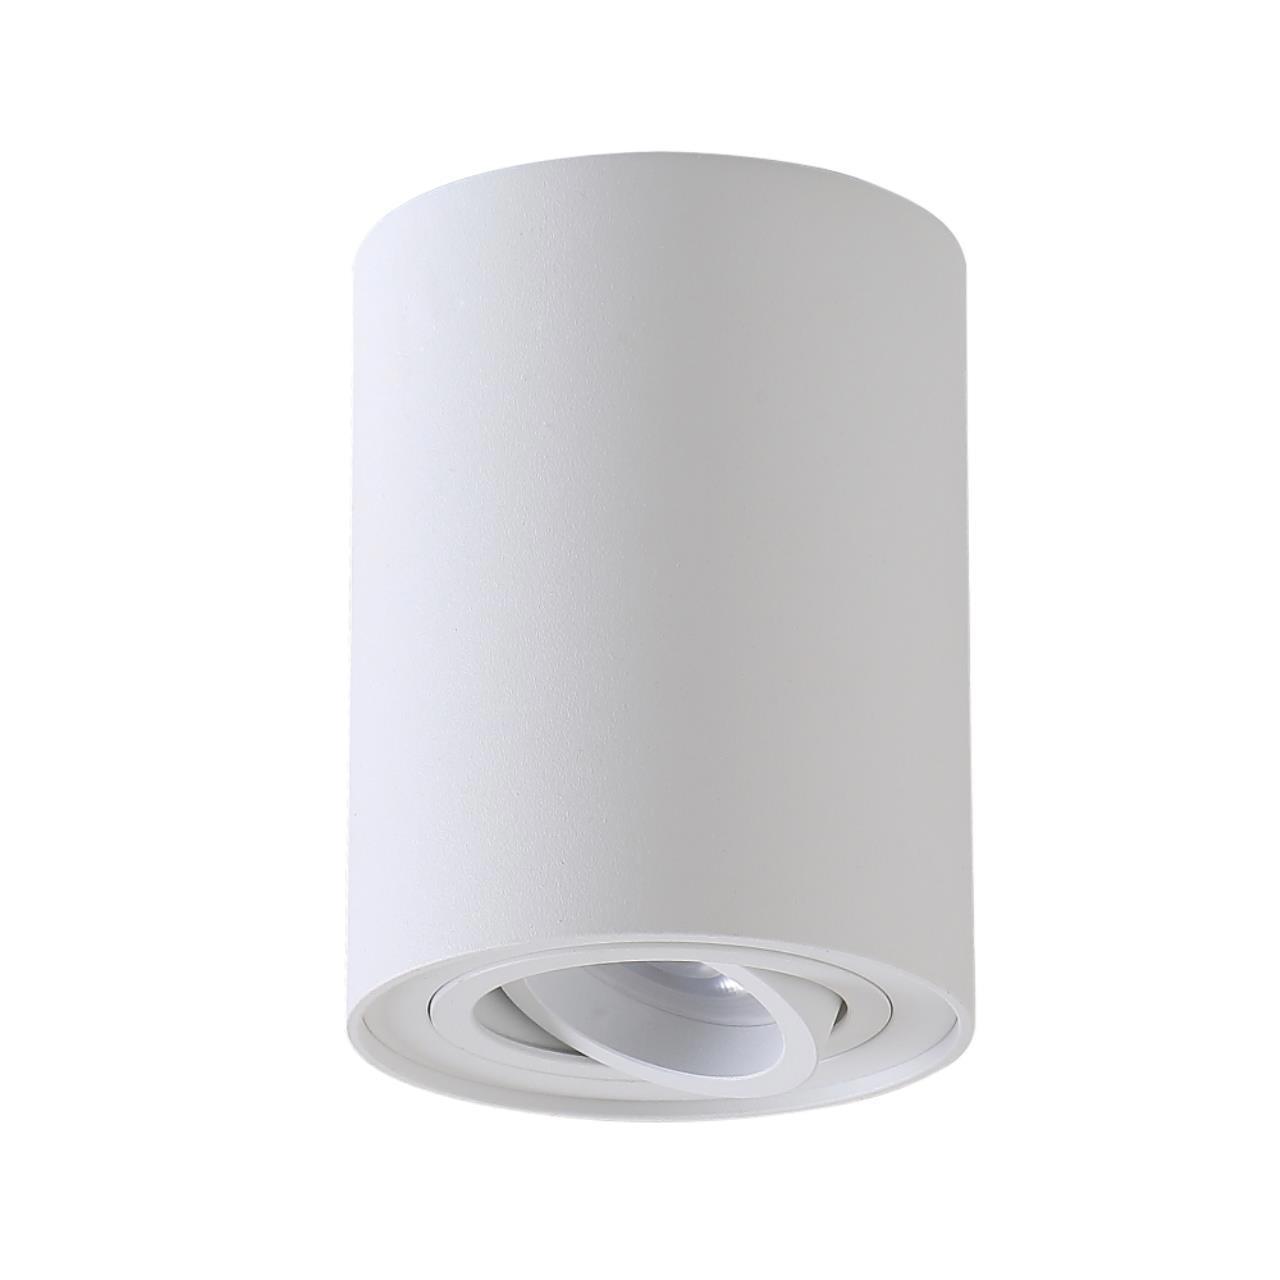 90159434 Светильник потолочный CLT 410 CLT 410C1 WH 1 лампа 2.8 м² цвет белый STLM-0120141 CRYSTAL LUX